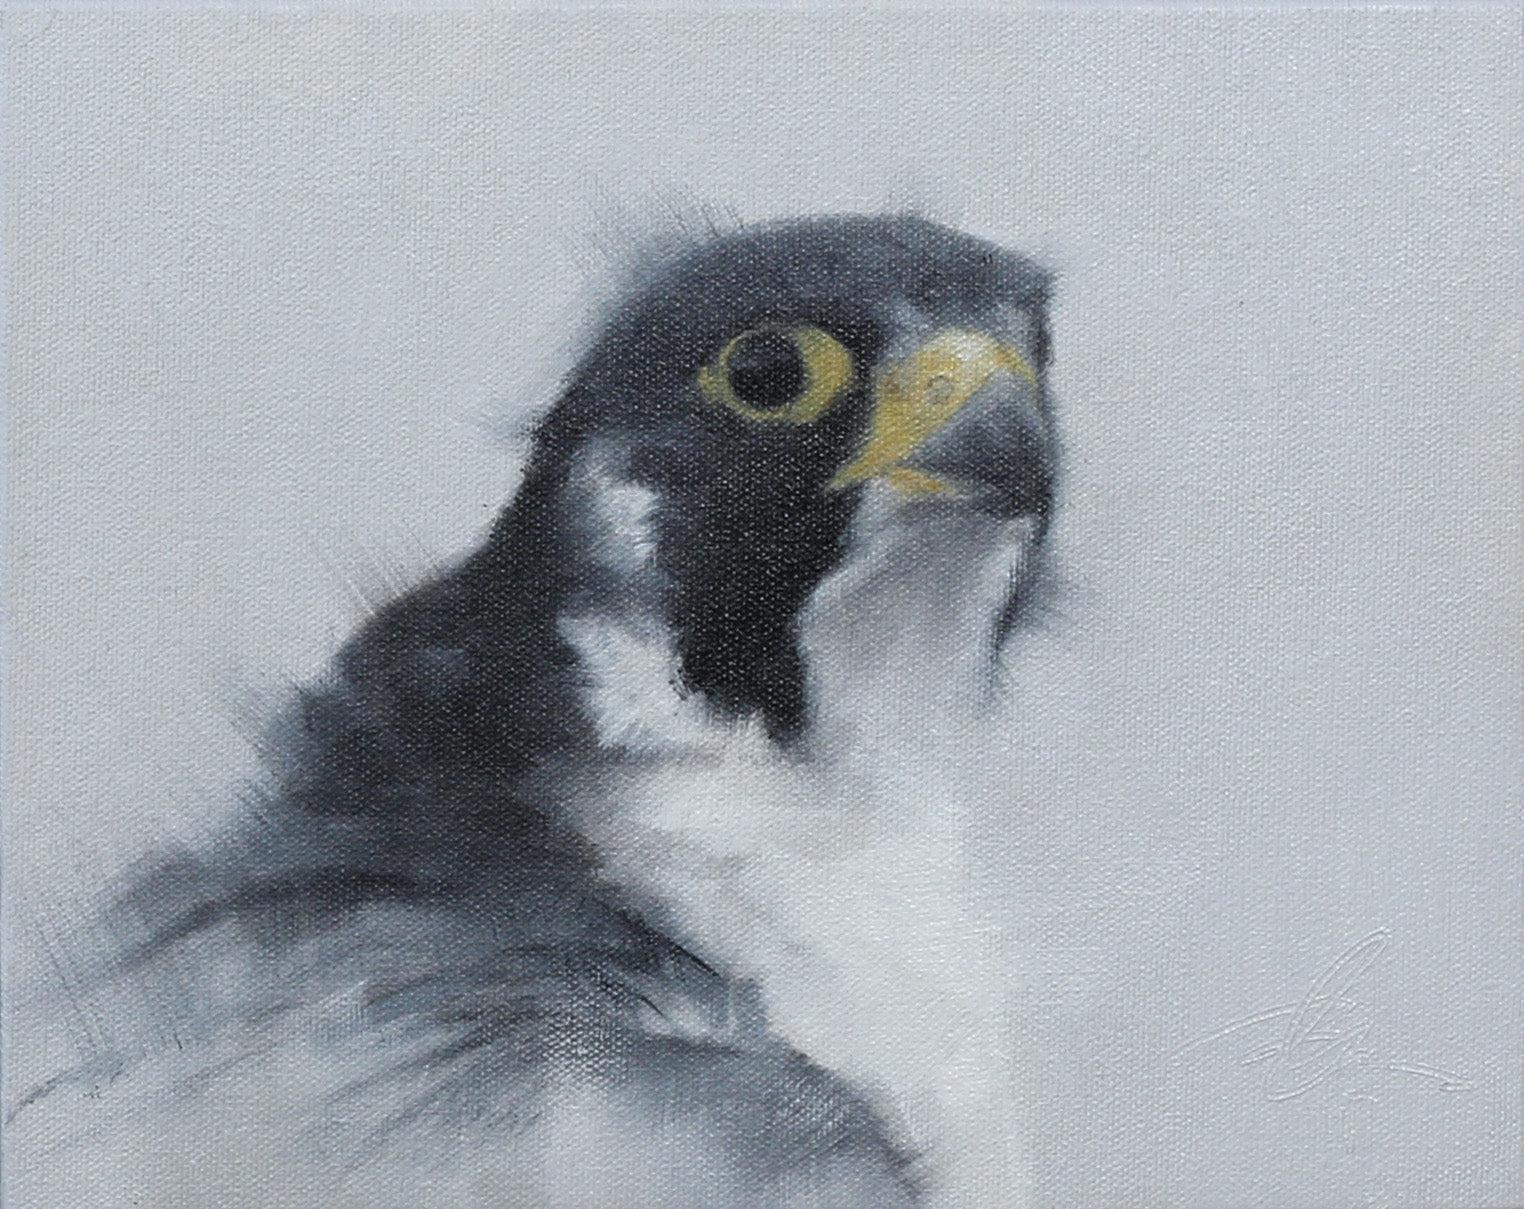 Falcon Study II-Painting-Doyle Hostetler-Sorrel Sky Gallery